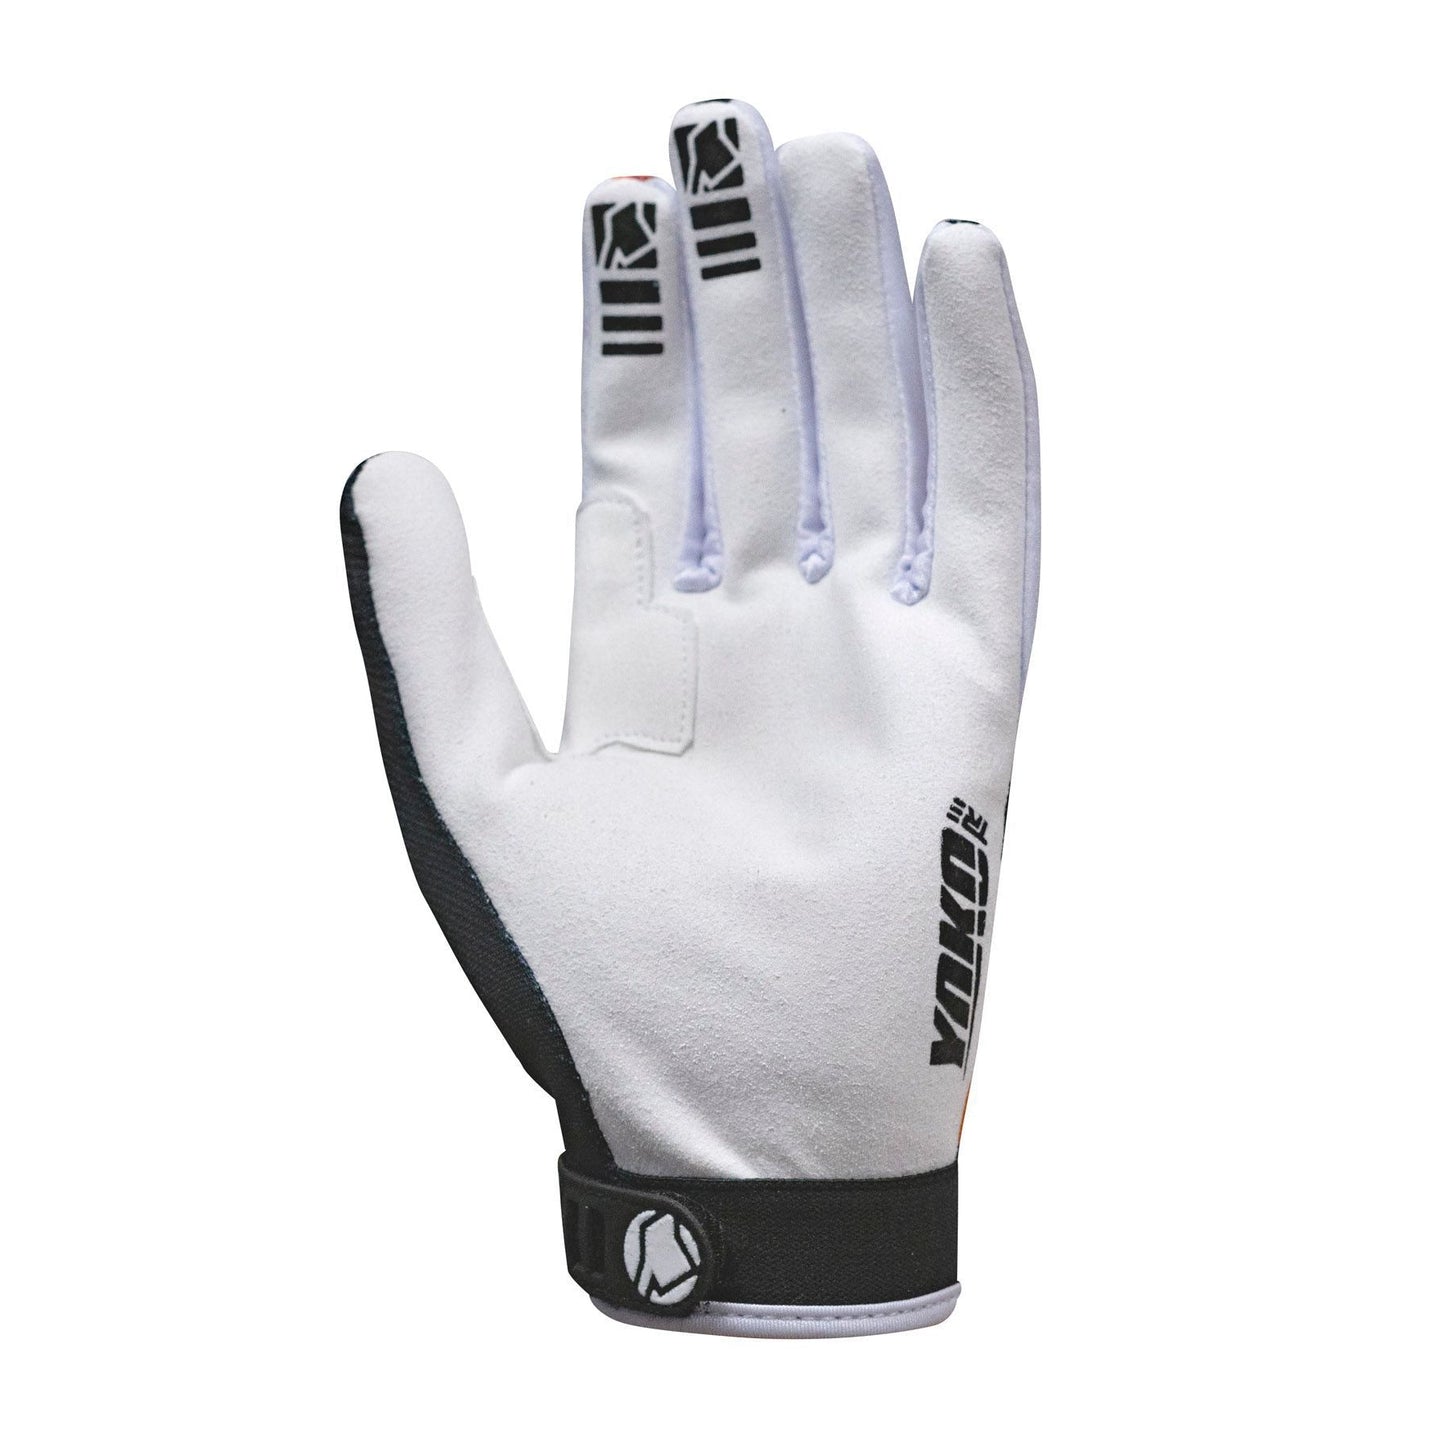 Yoko Tre Gloves Black Orange White MX21 - YOKO